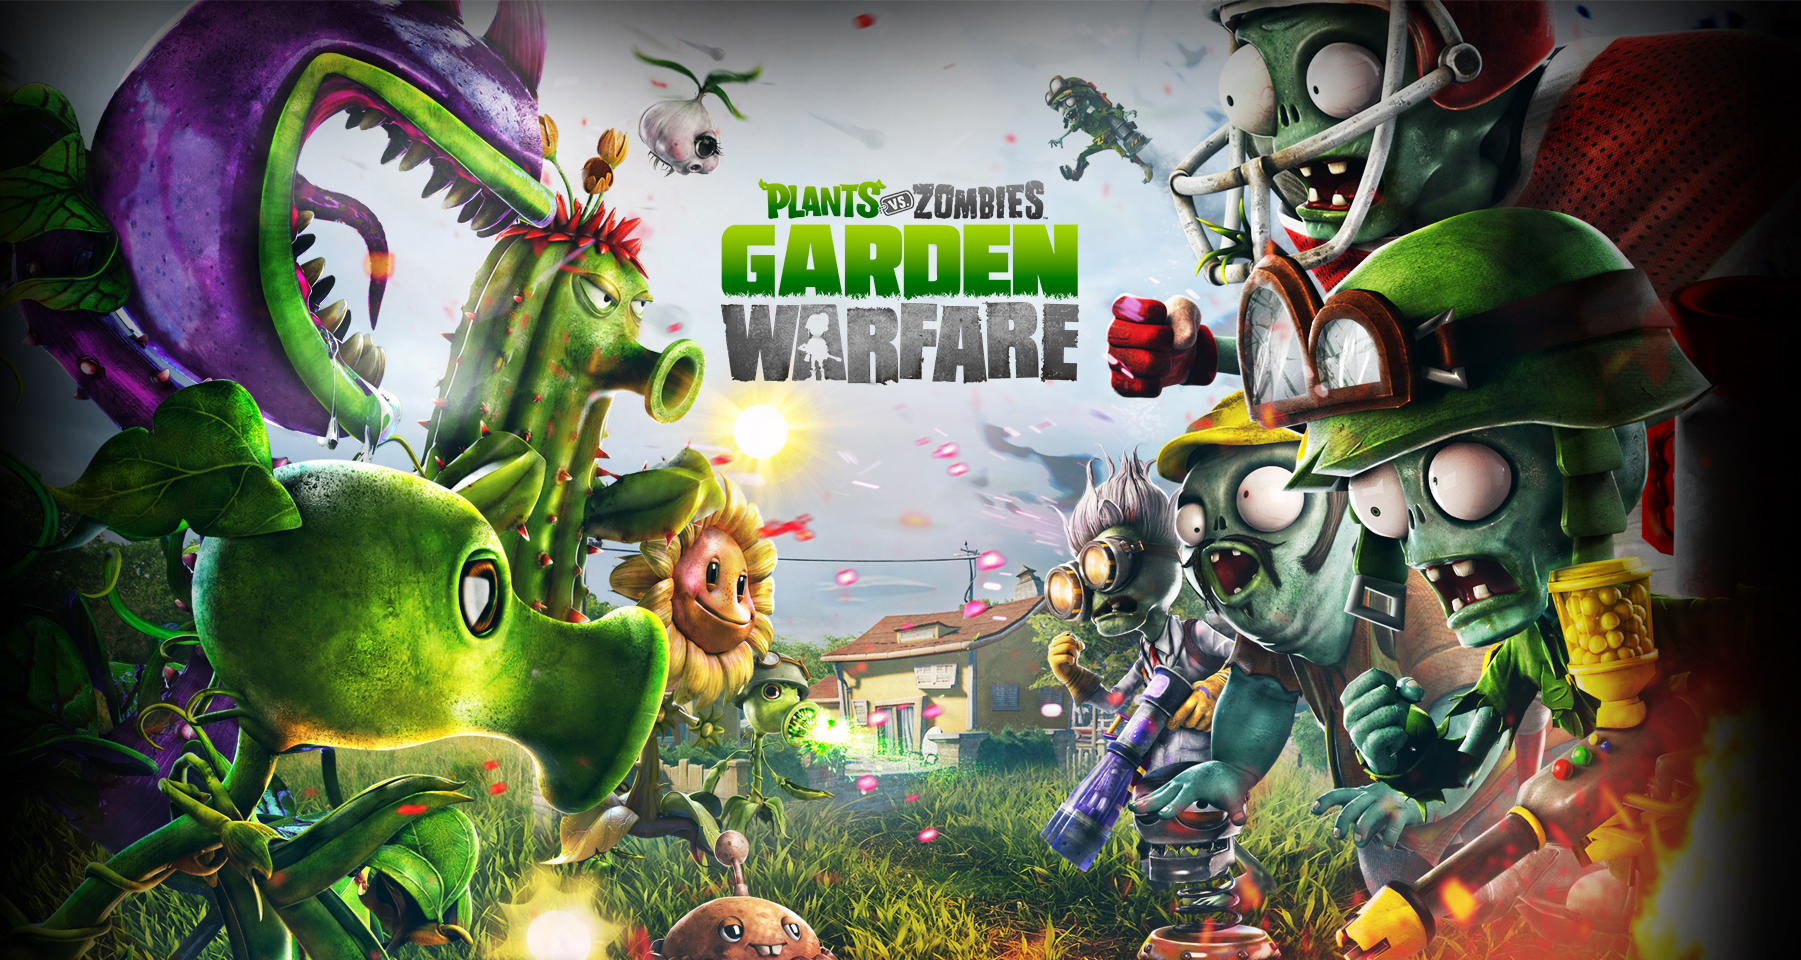 Plants vs. Zombies: Garden Warfare 2 - Plant Variant Gameplay